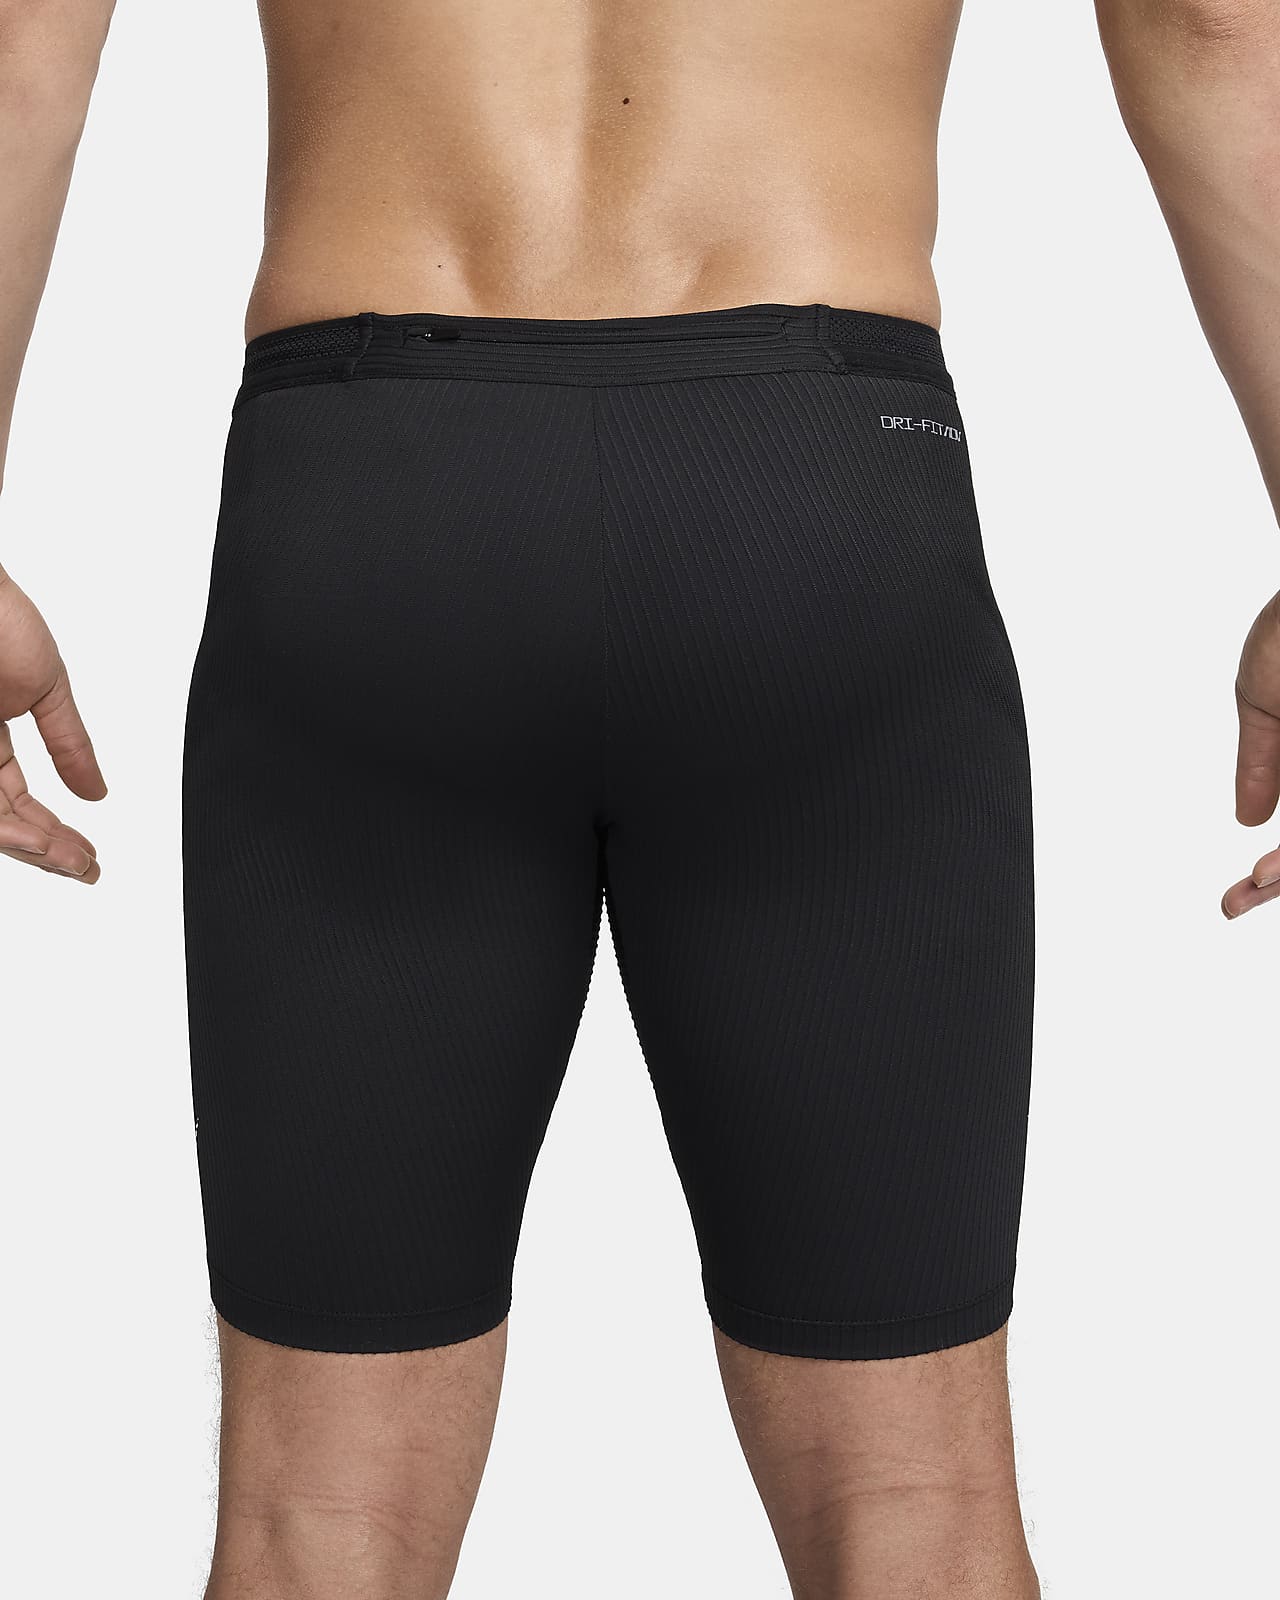 Official Nike DriFIT ADV AeroSwift M pants DM4613-010 Men's Size (XXL) for  sale online